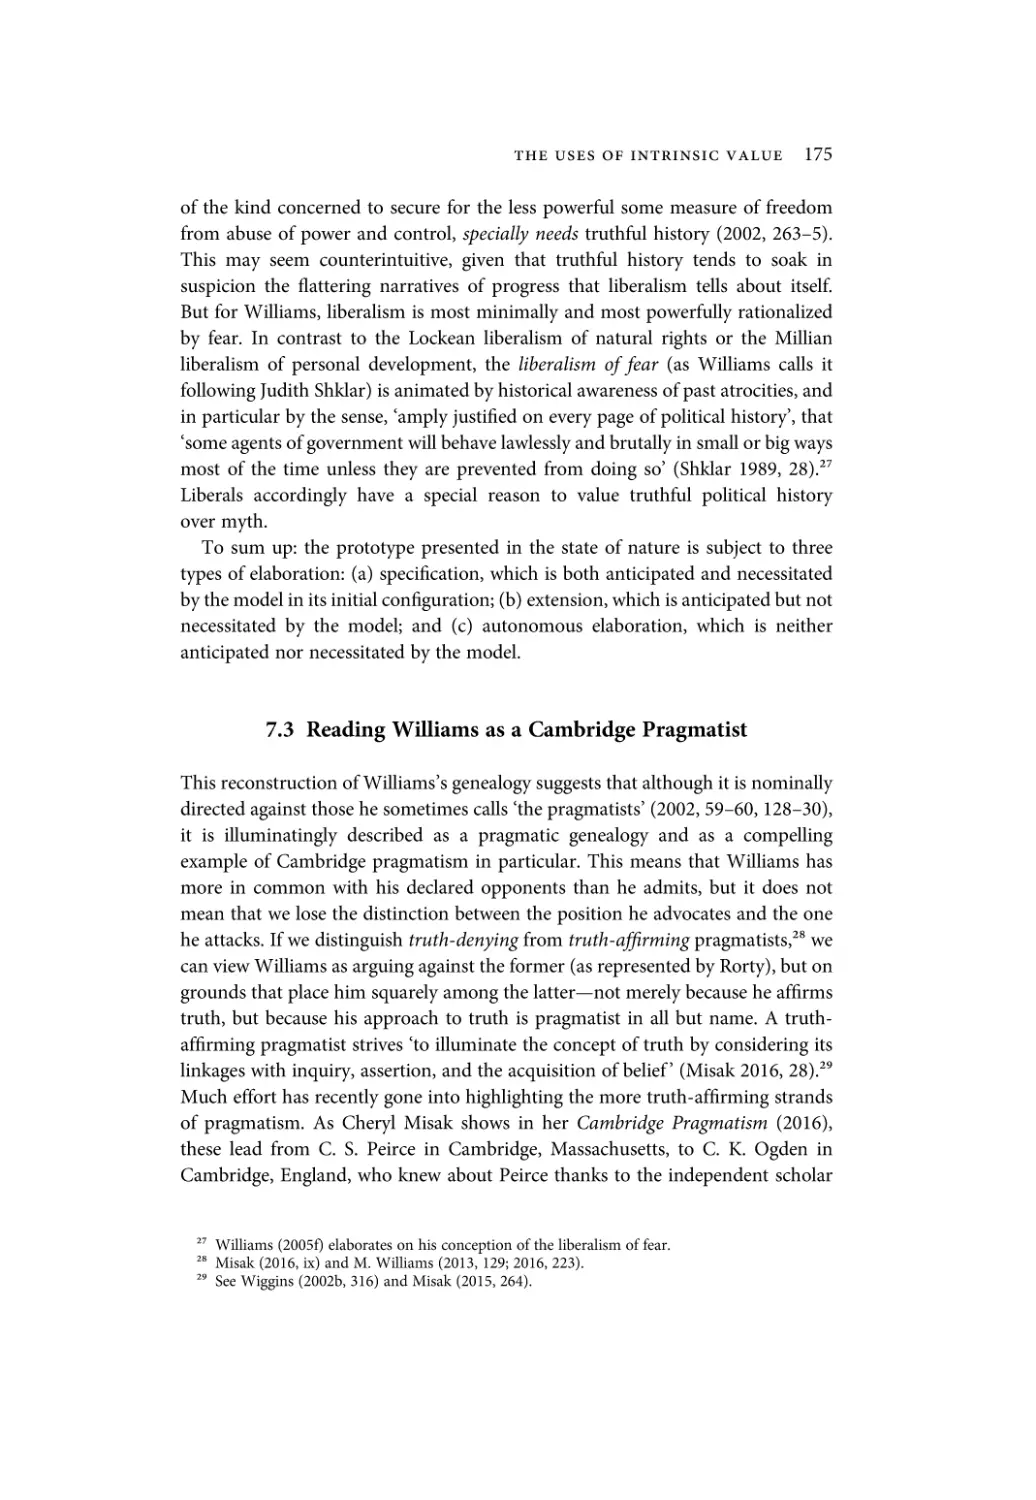 7.3 Reading Williams as a Cambridge Pragmatist